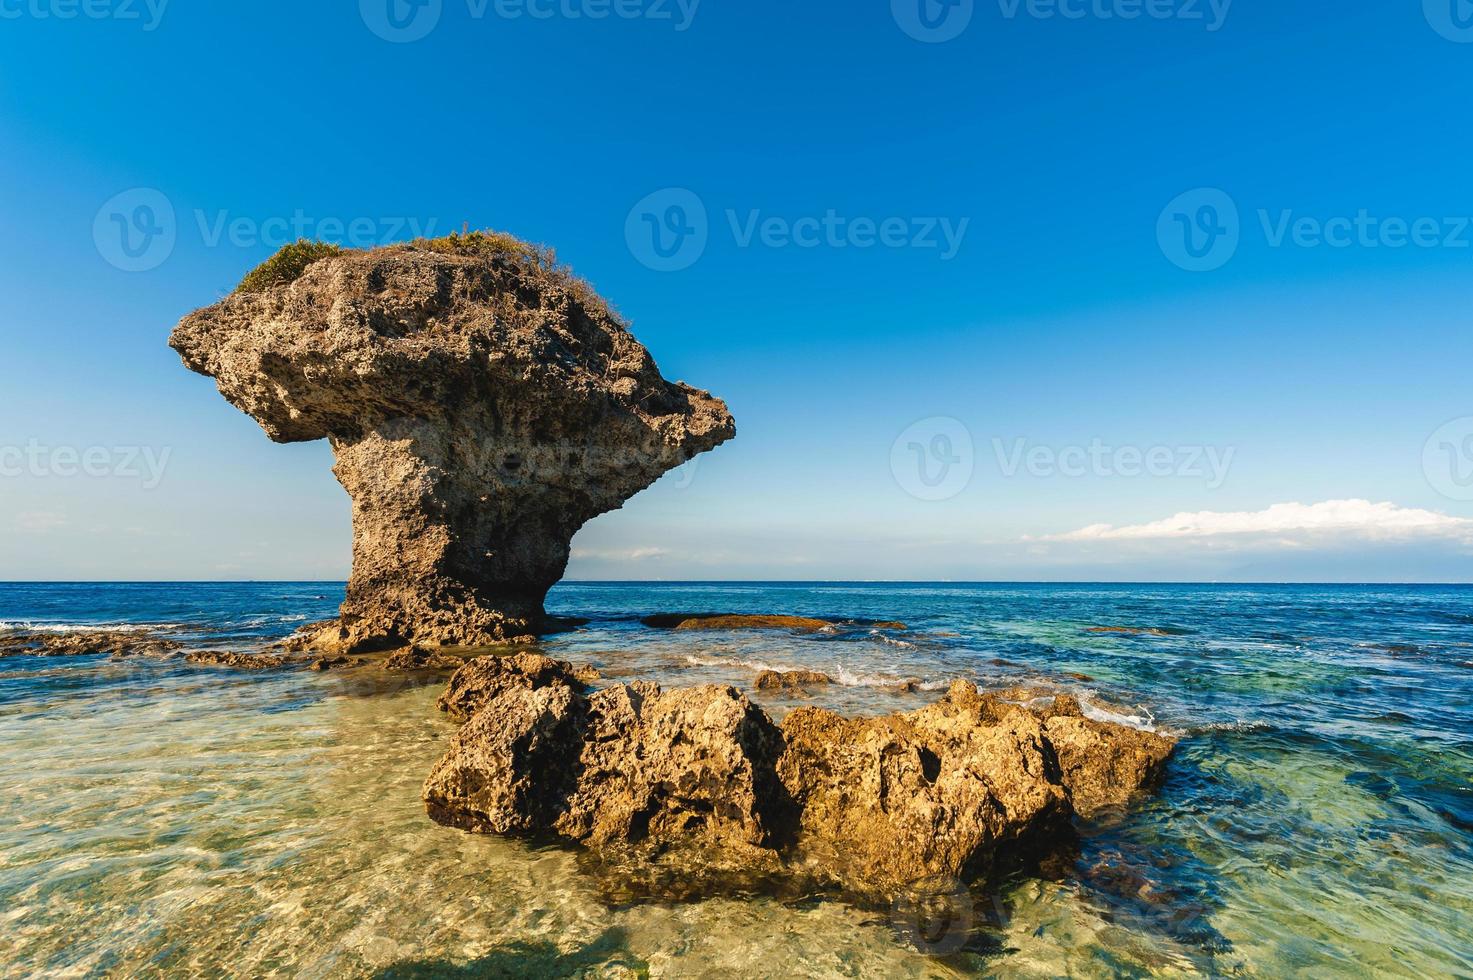 Flower Vase Coral Rock at Lamay island in pingtung county, Taiwan photo